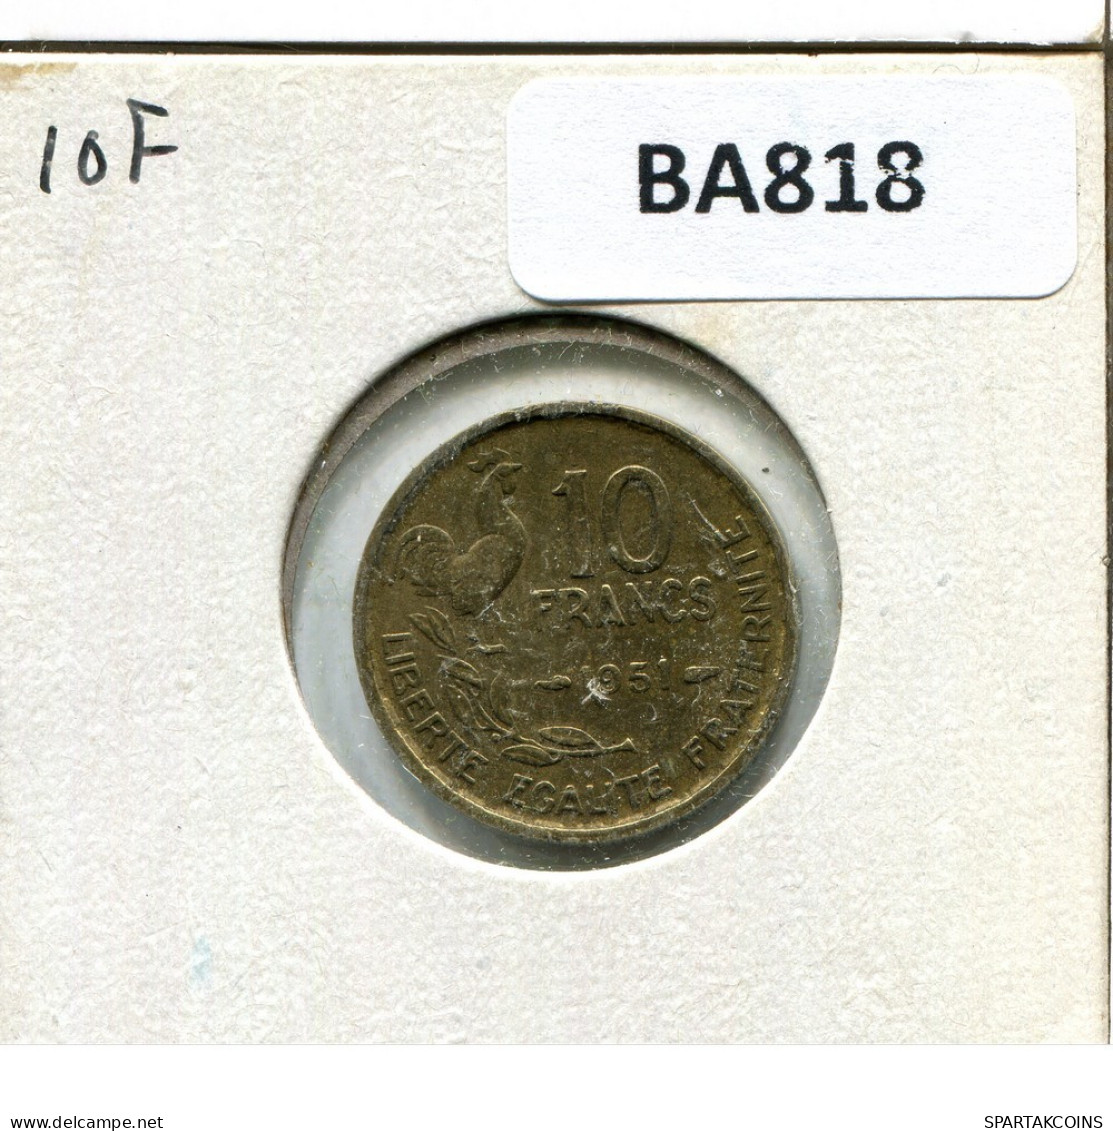 10 FRANCS 1951 FRANCE Coin French Coin #BA818.U.A - 10 Francs